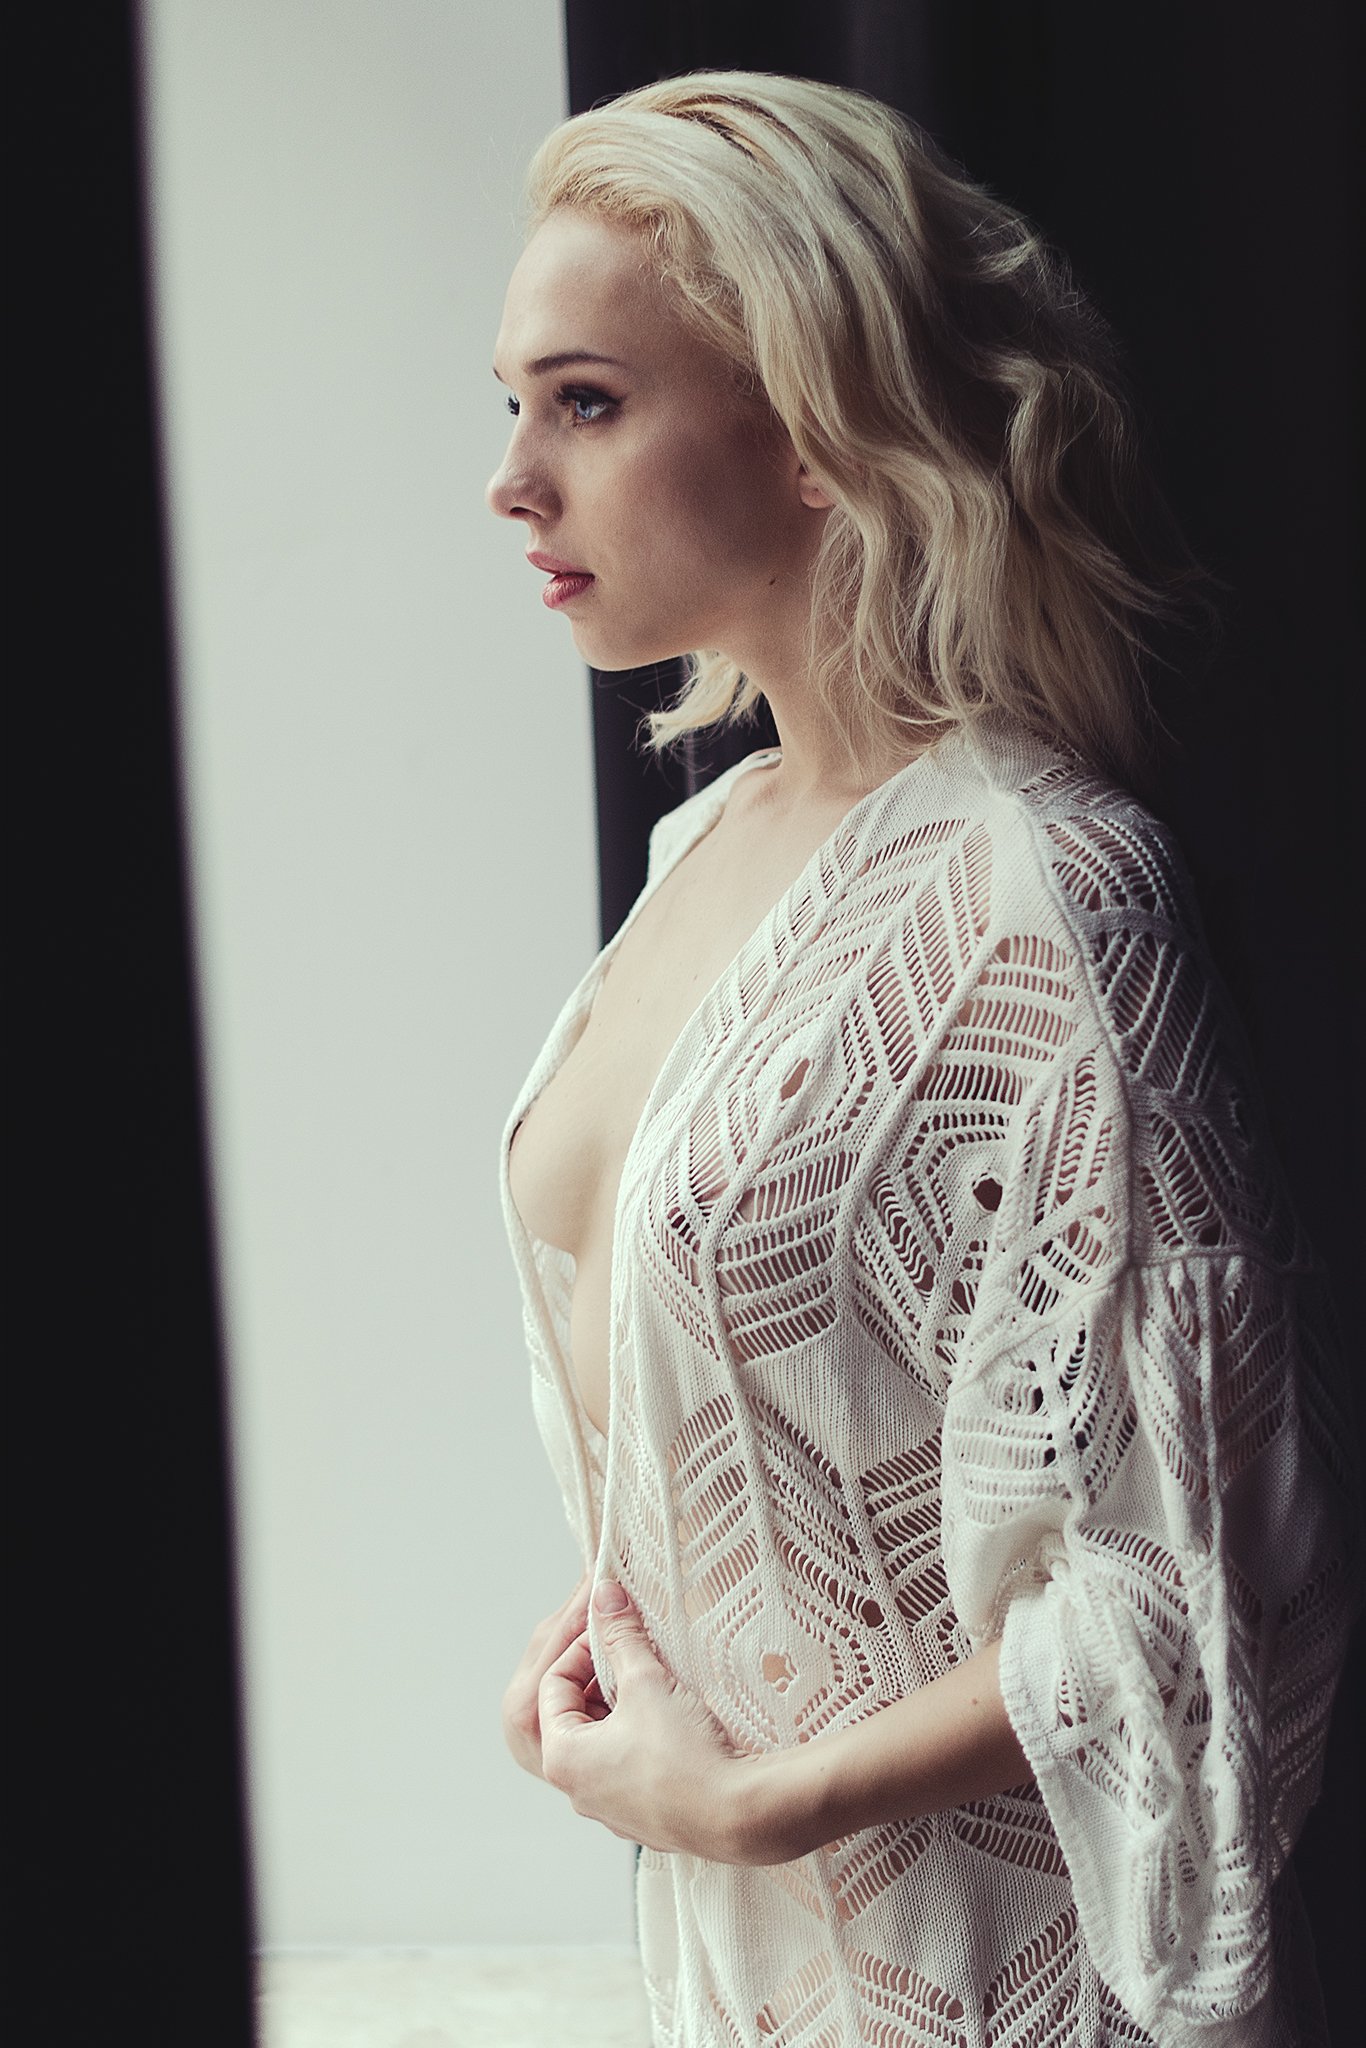 nude, sensual, blonde, woman, natural light, Michał Laskowski